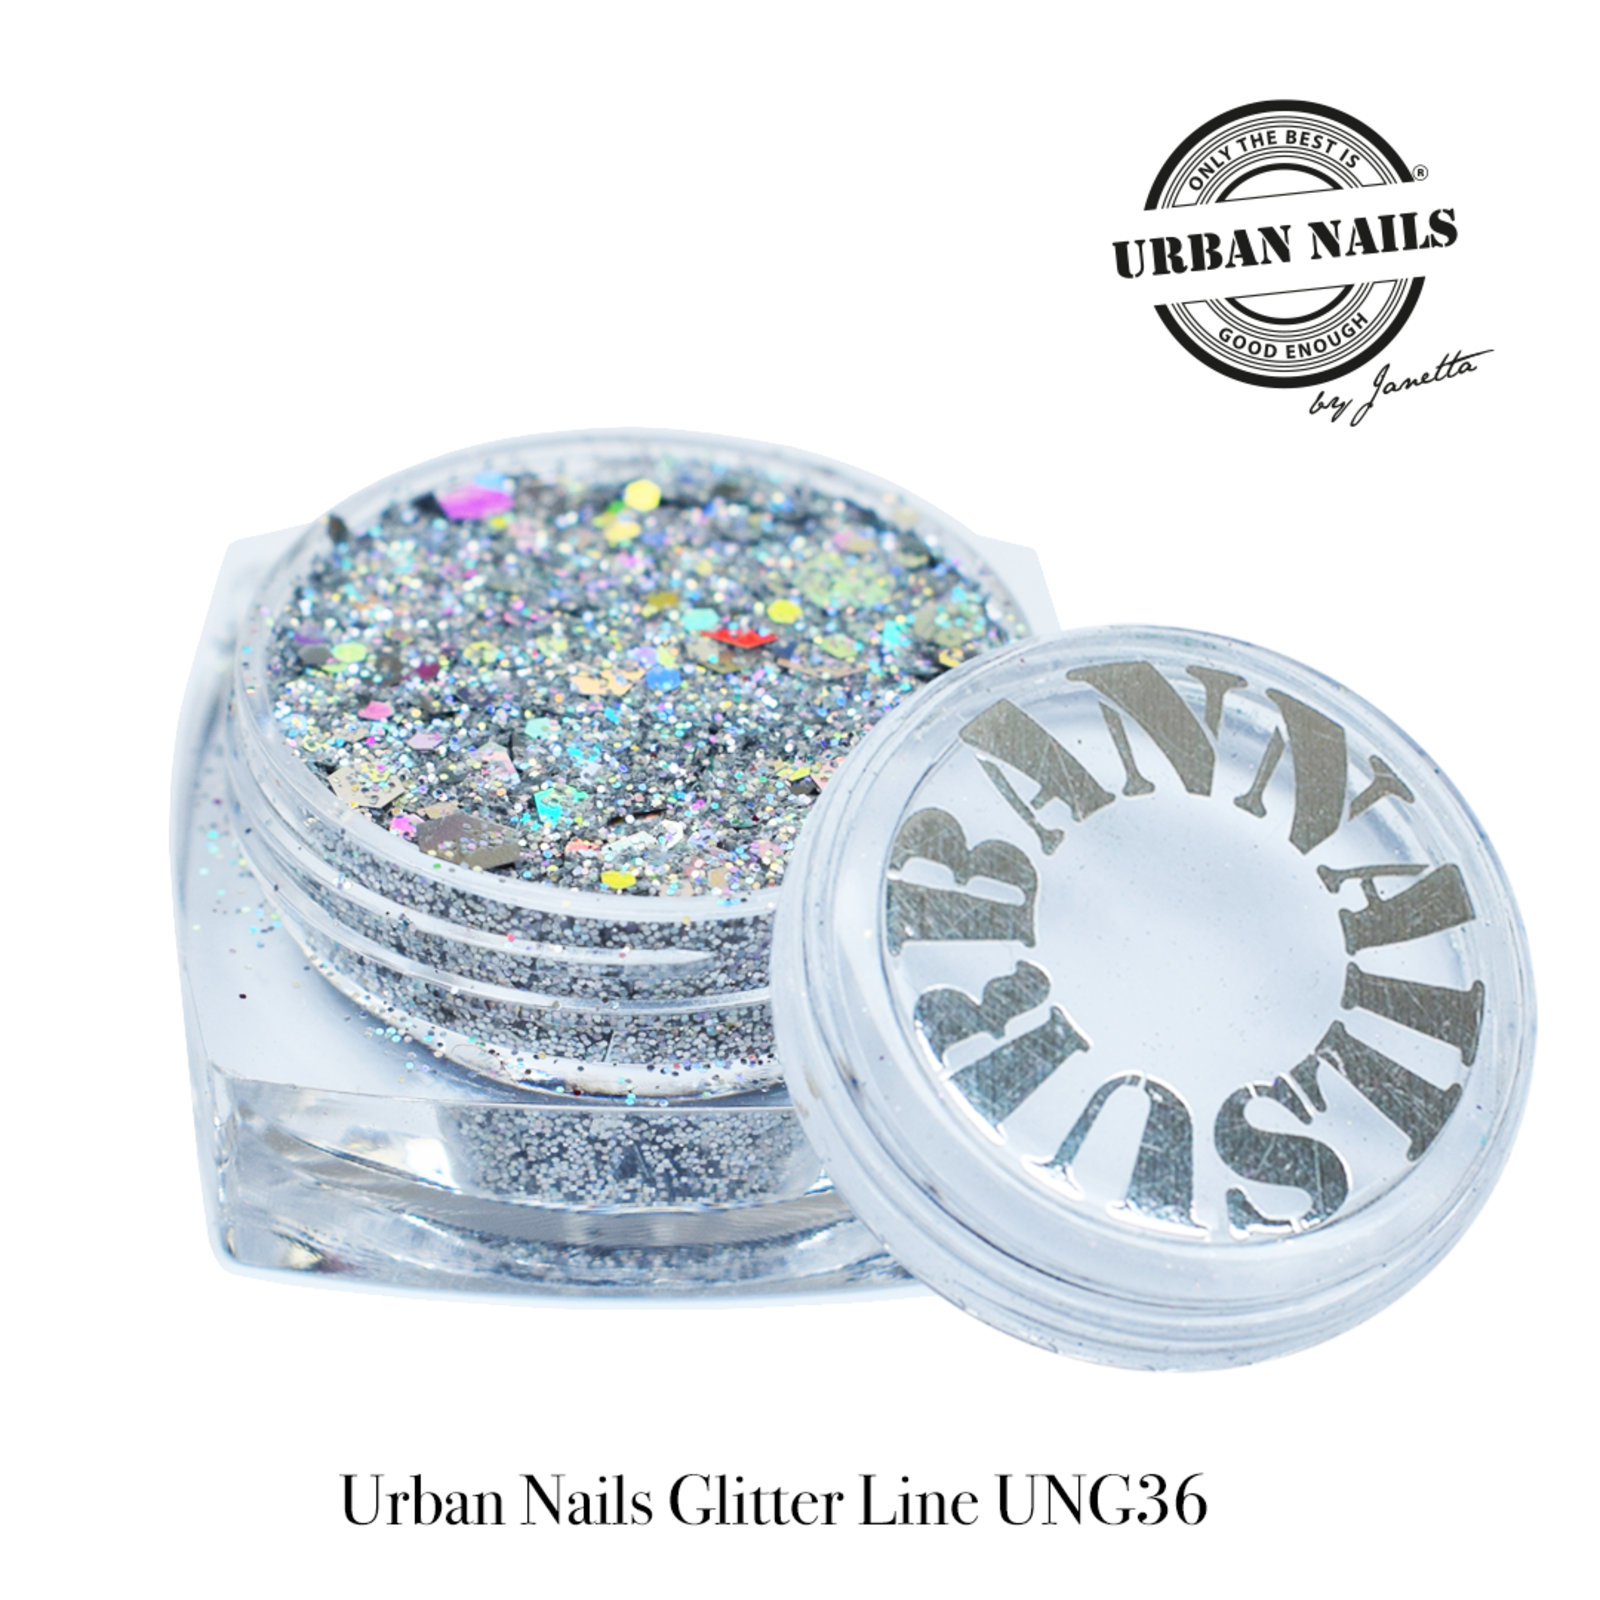 Urban nails Glitter Line UNG36